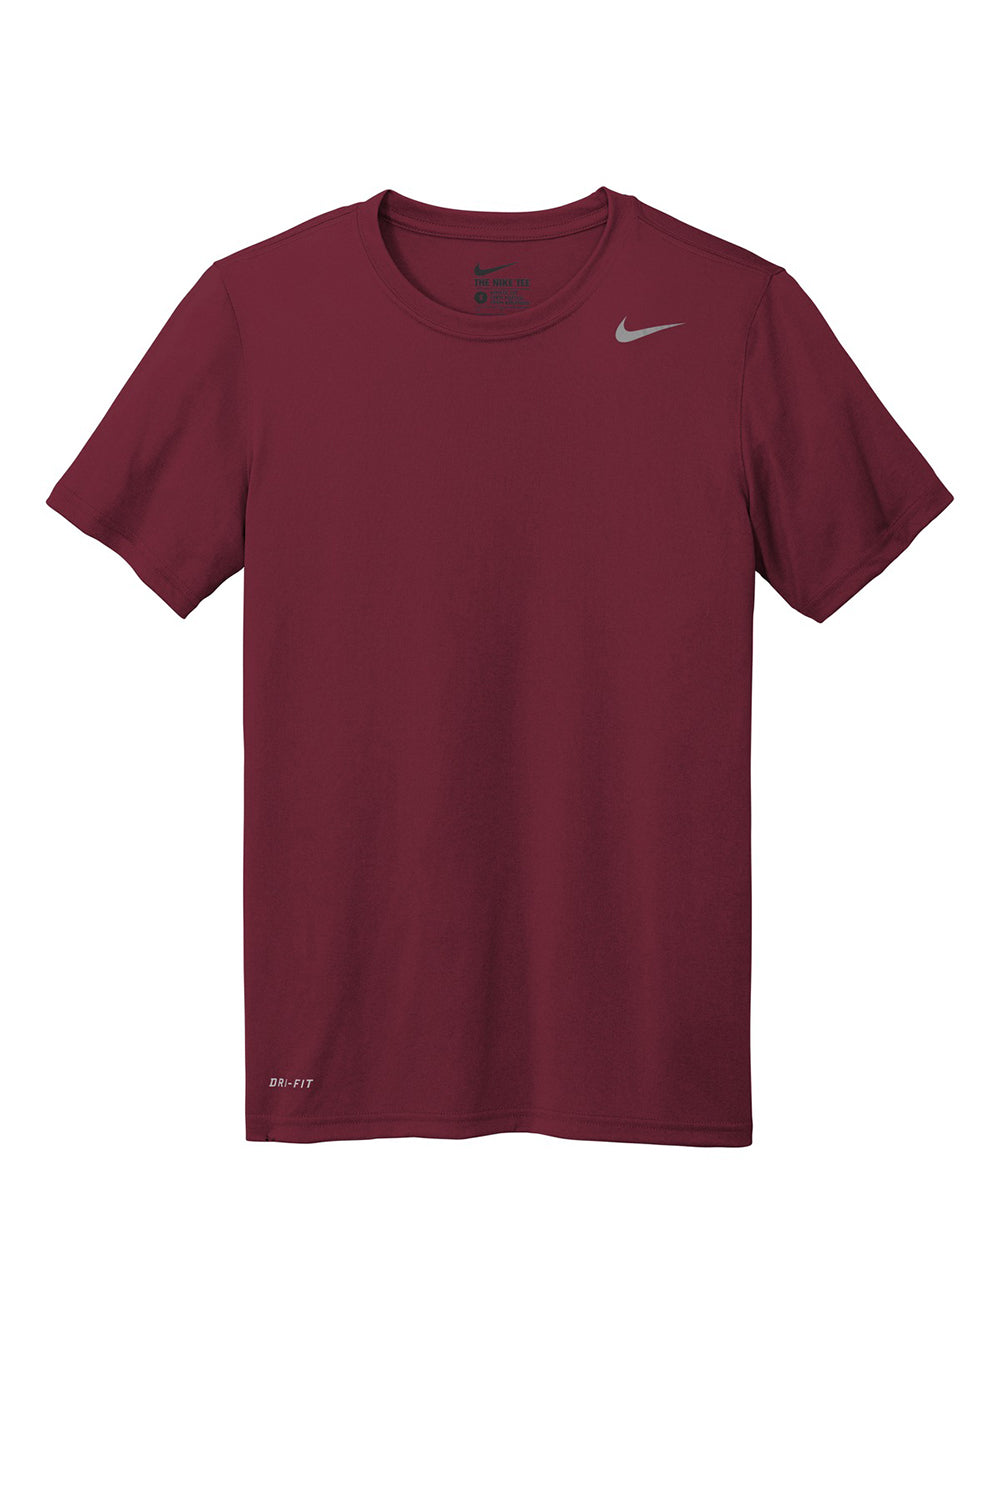 Nike 727982 Mens Legend Dri-Fit Moisture Wicking Short Sleeve Crewneck T-Shirt Deep Maroon Flat Front